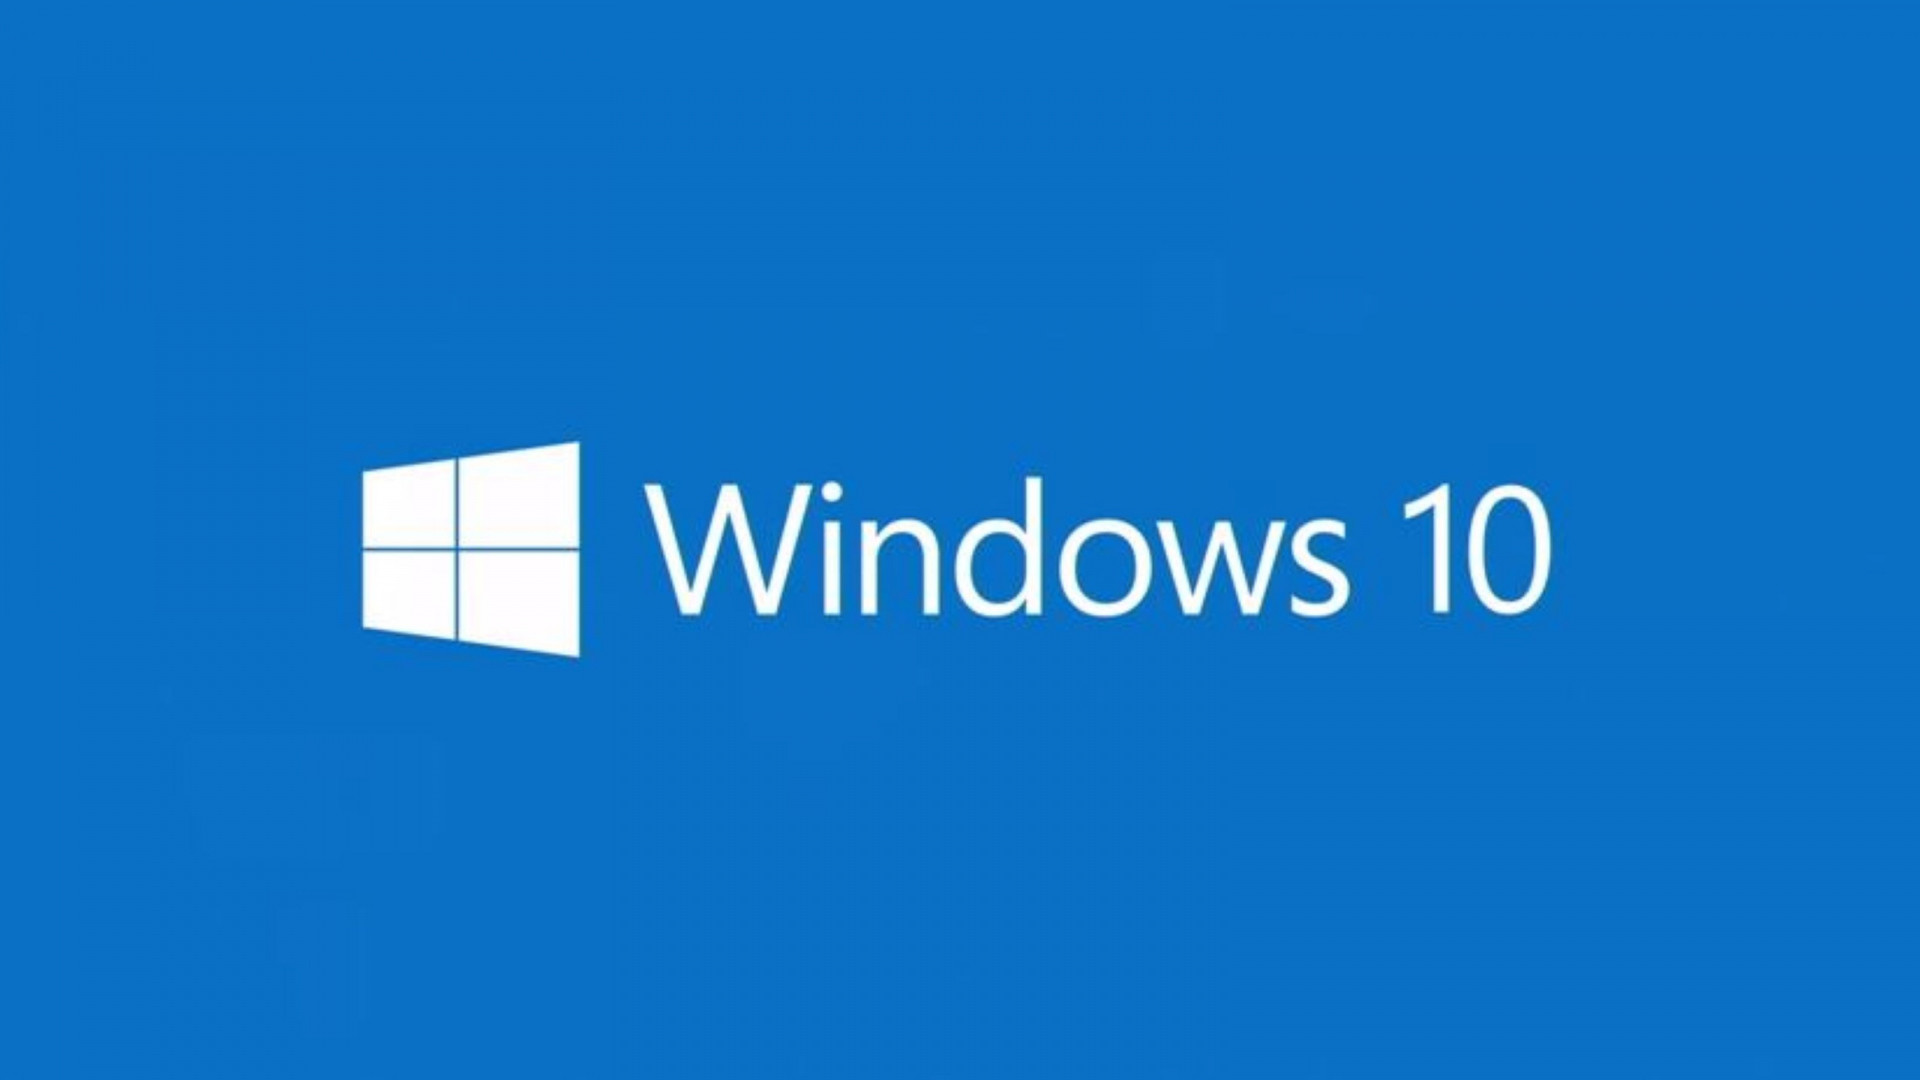 Preview Wallpaper Windows 10 Technical Preview Windows 10 Logo Microsoft 1920x1080 1920x1080